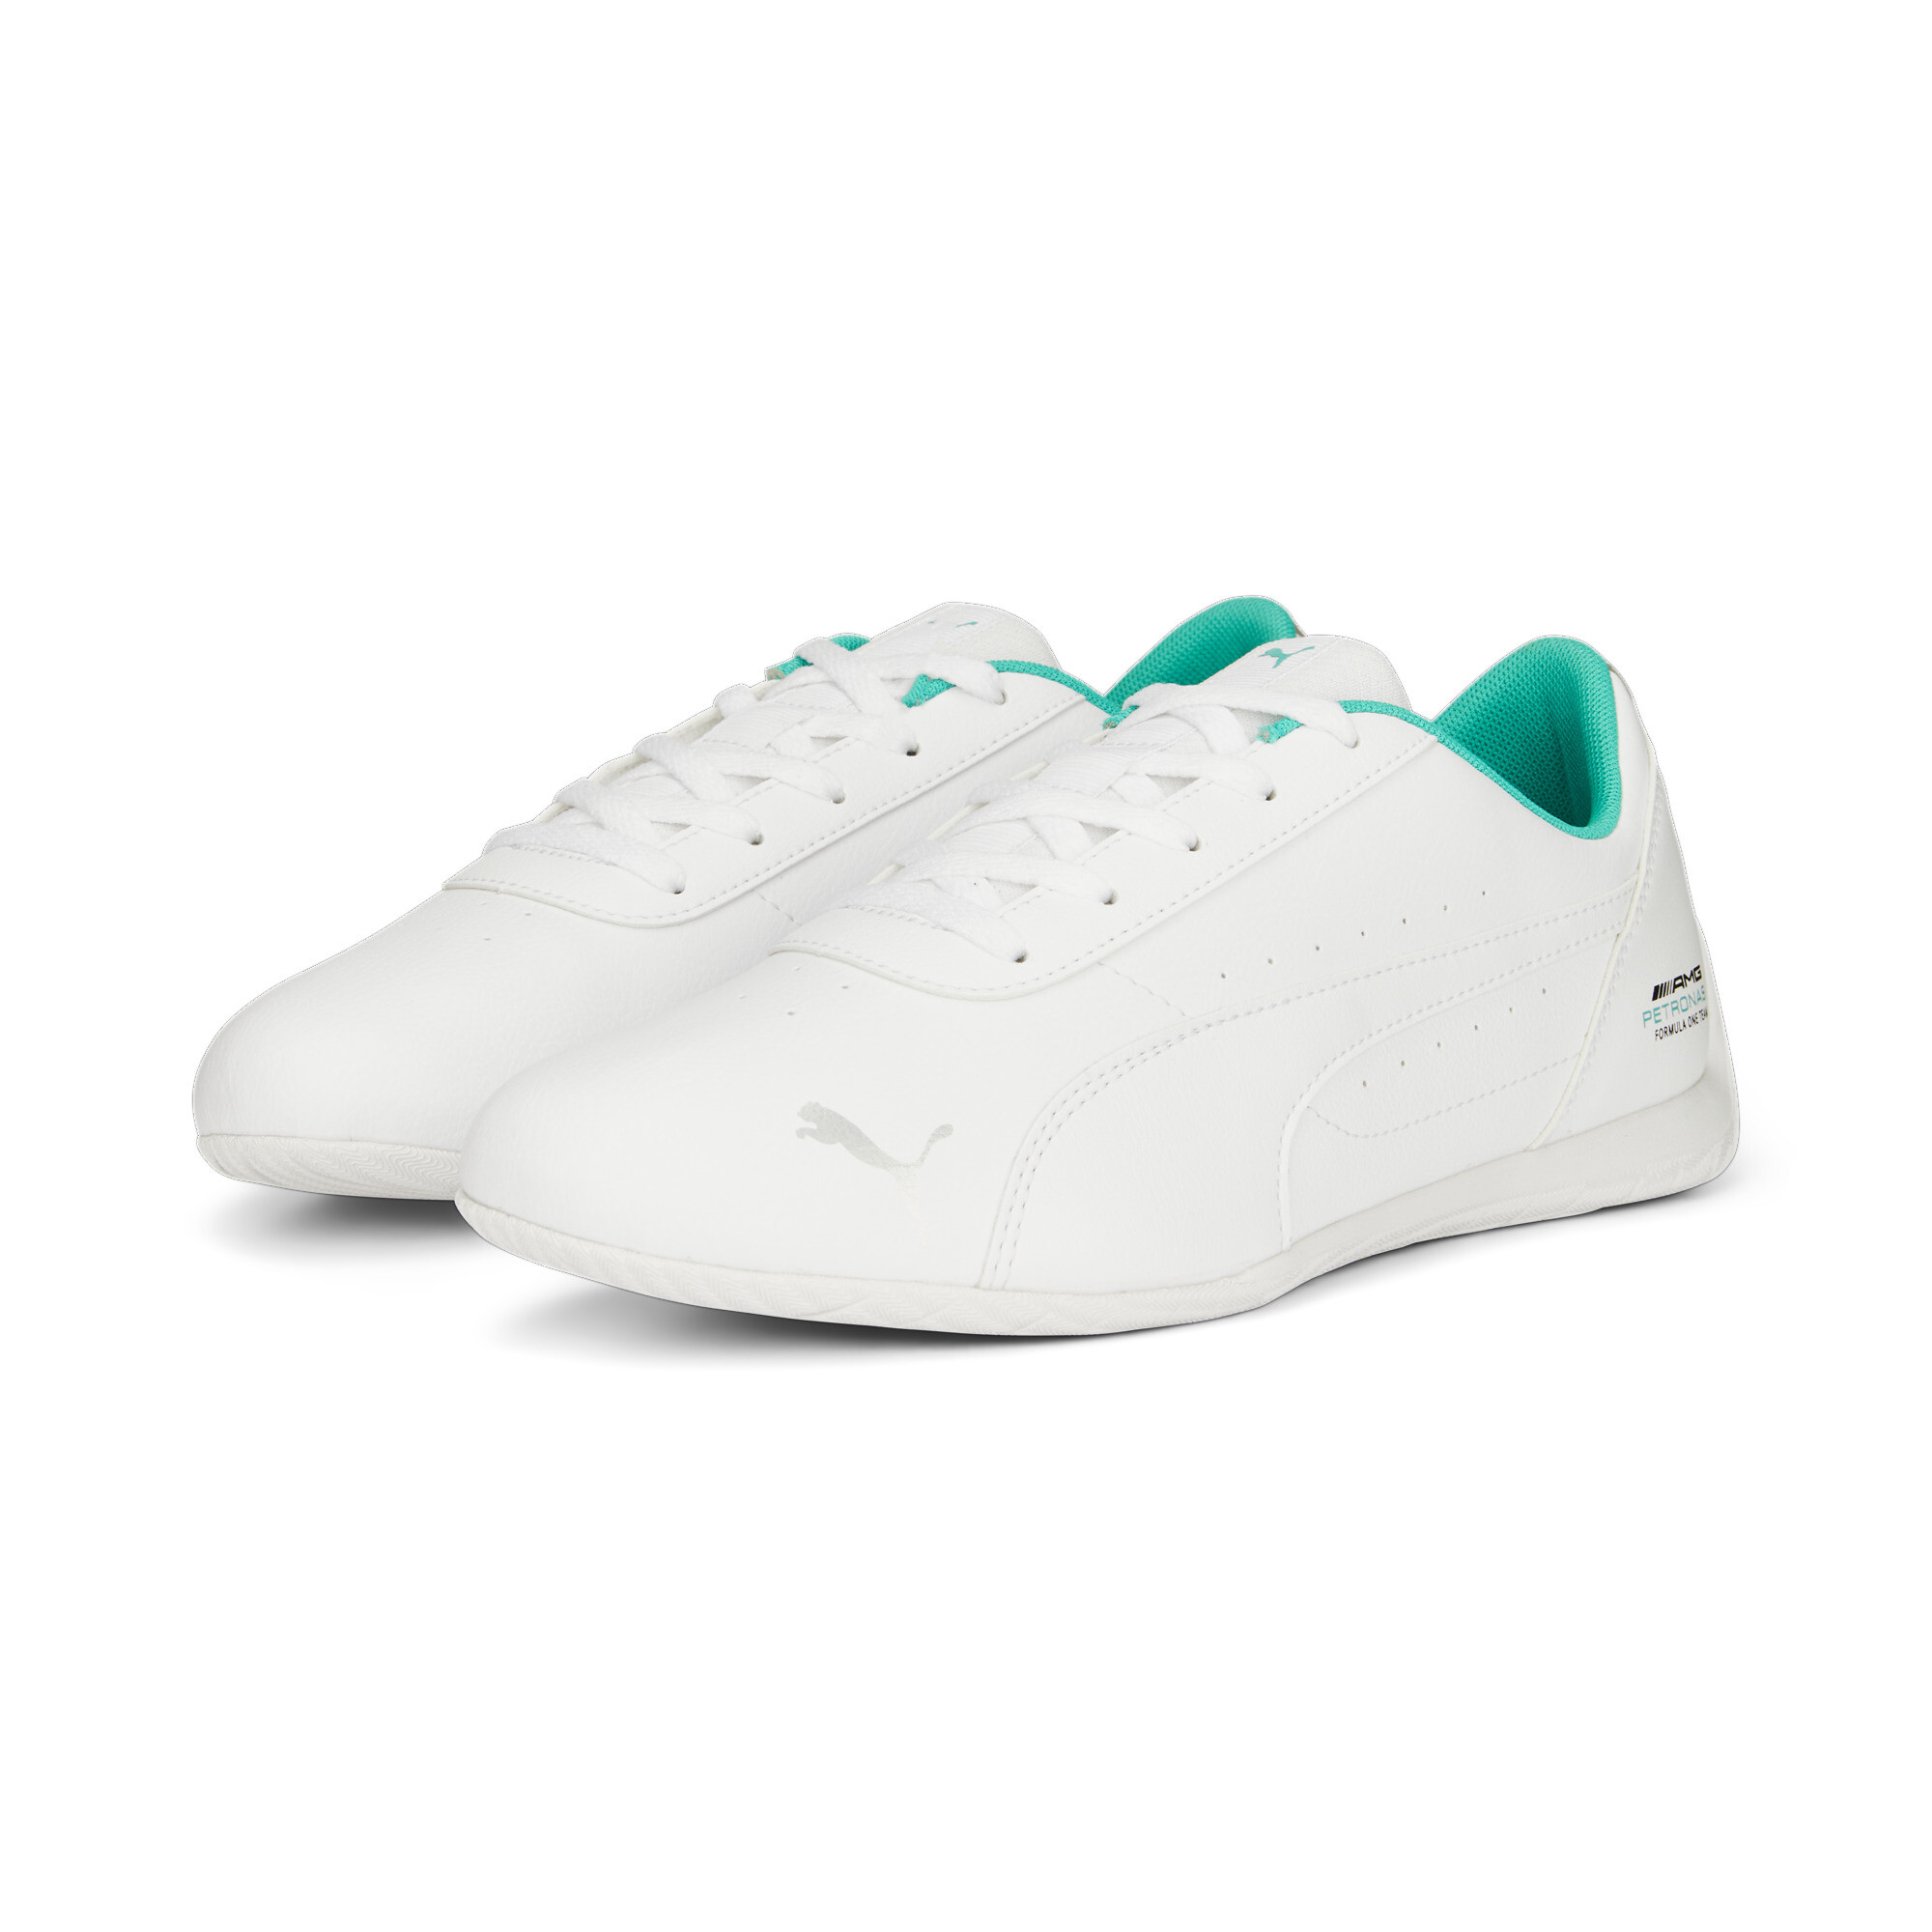 Puma Mercedes F1 Neo Cat Motorsport Shoes, White, Size 38.5, Shoes